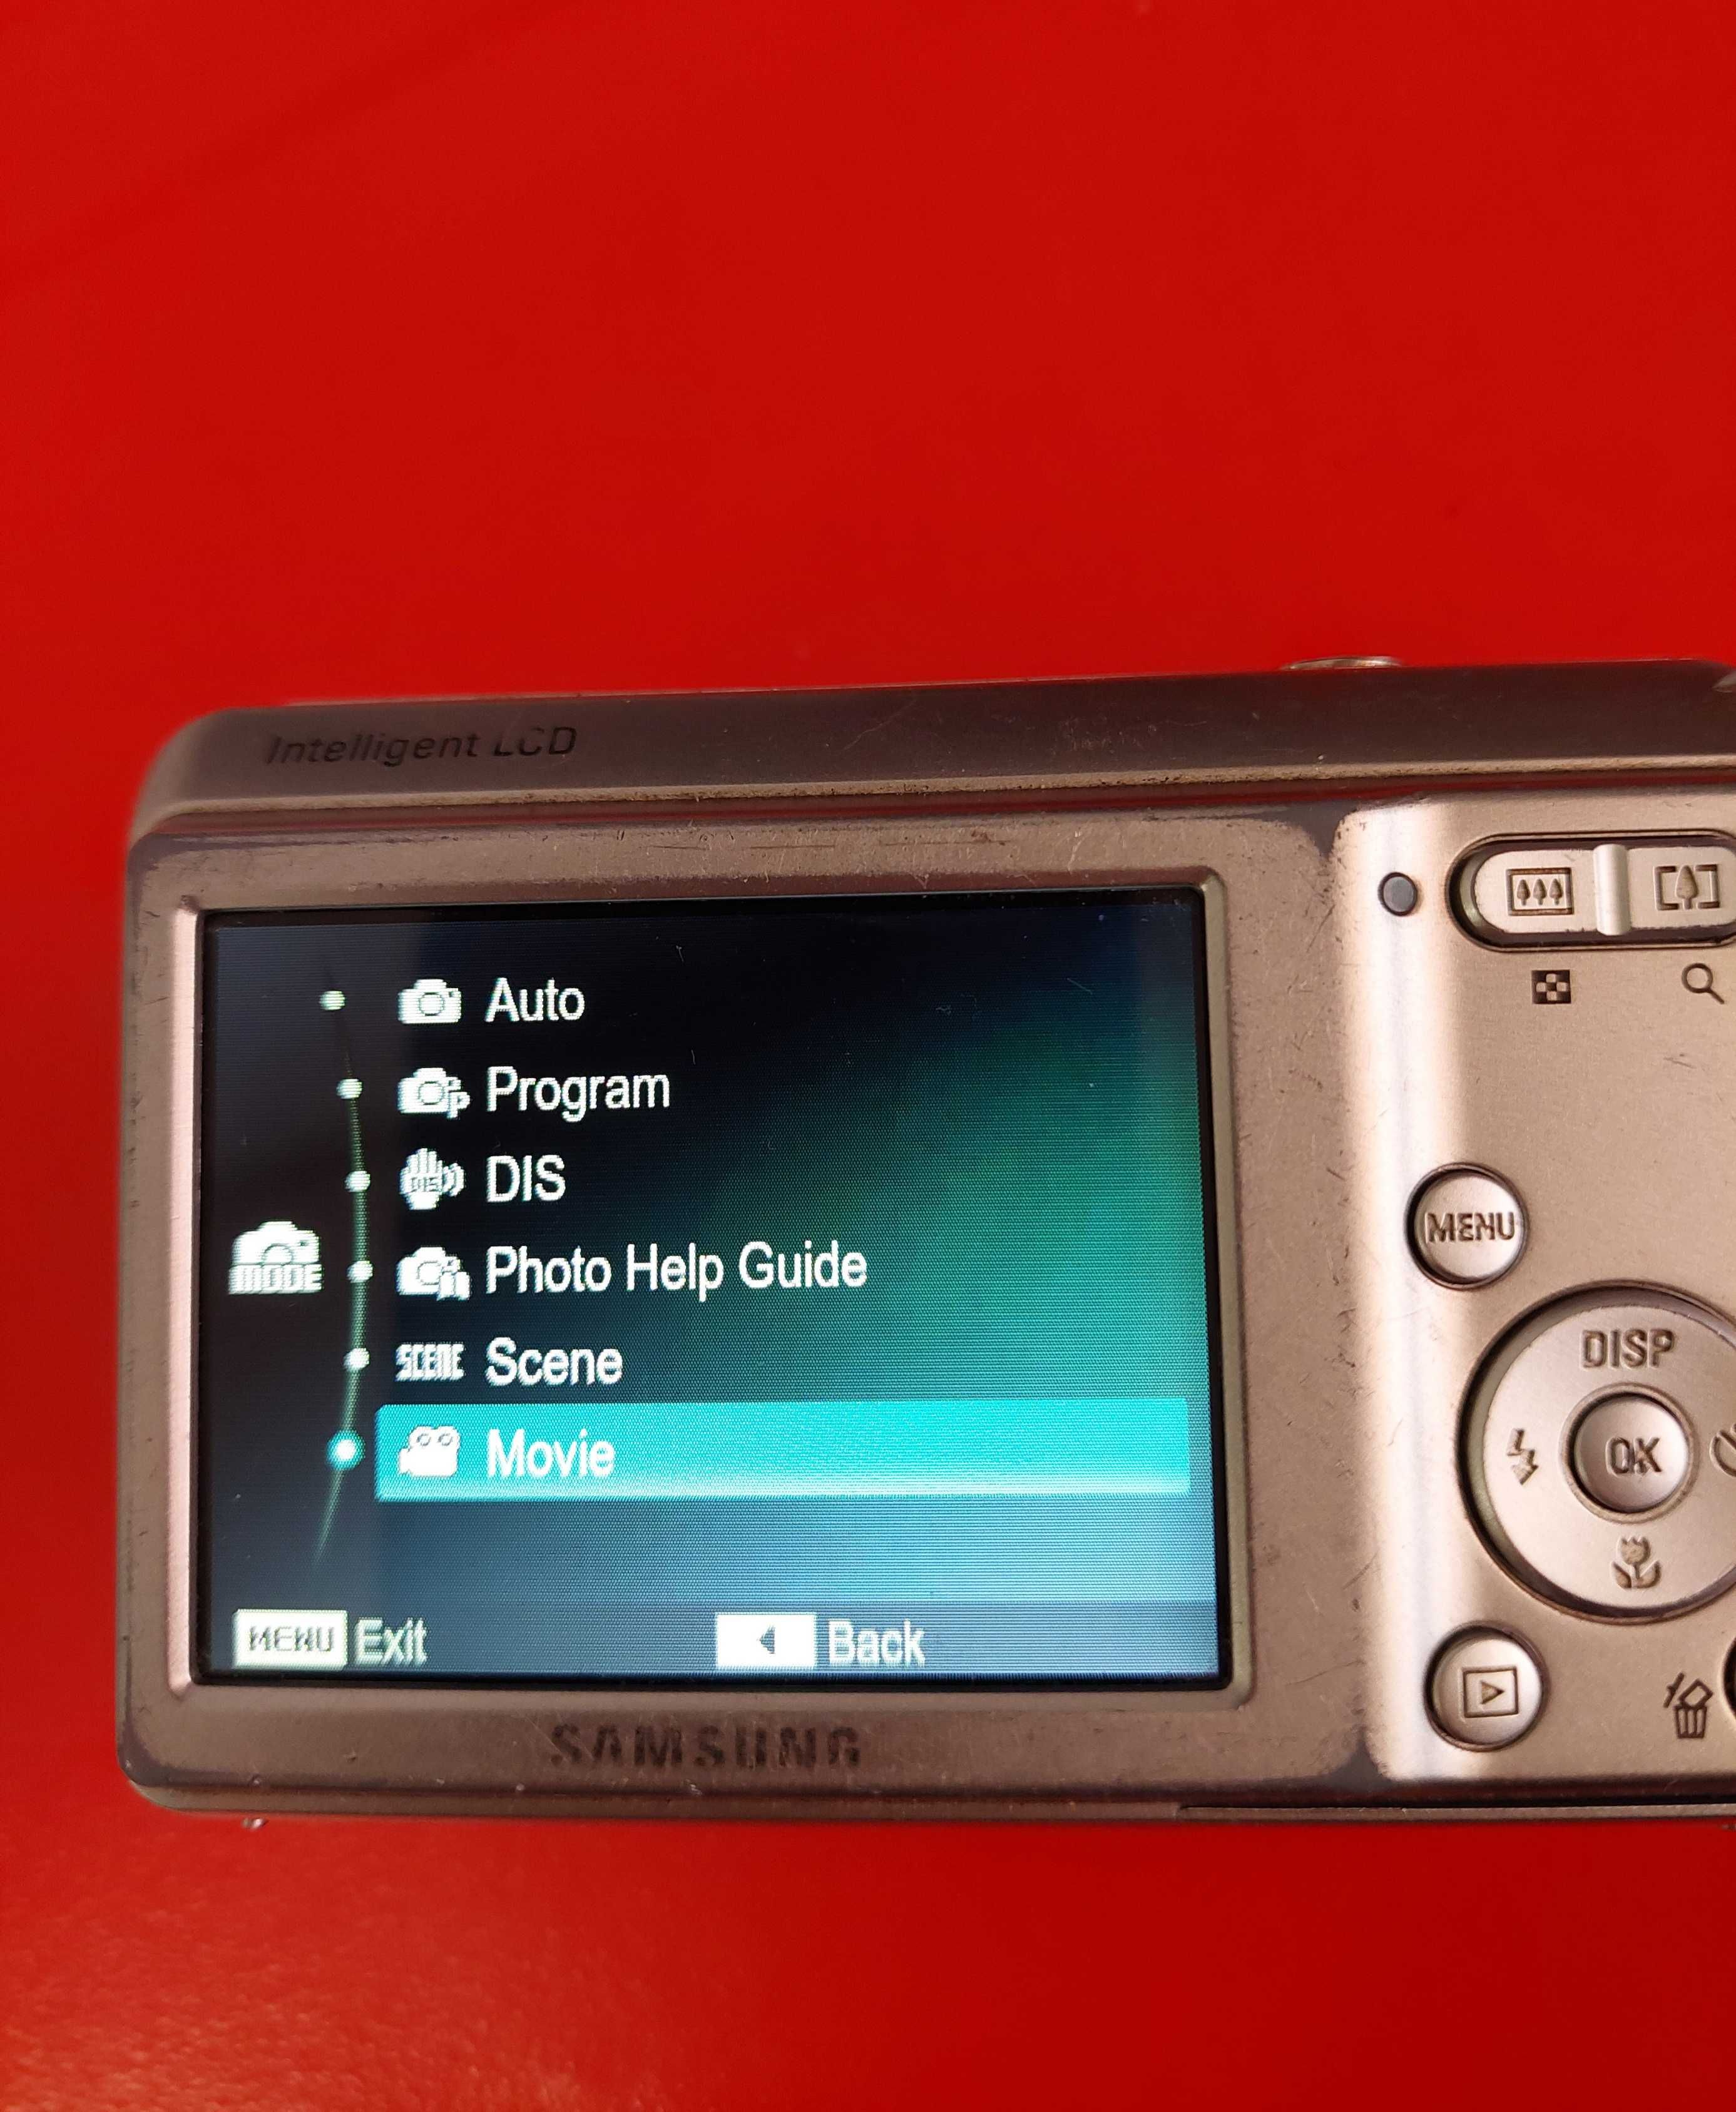 Samsung ES15 cu SD card inclus 1Gb